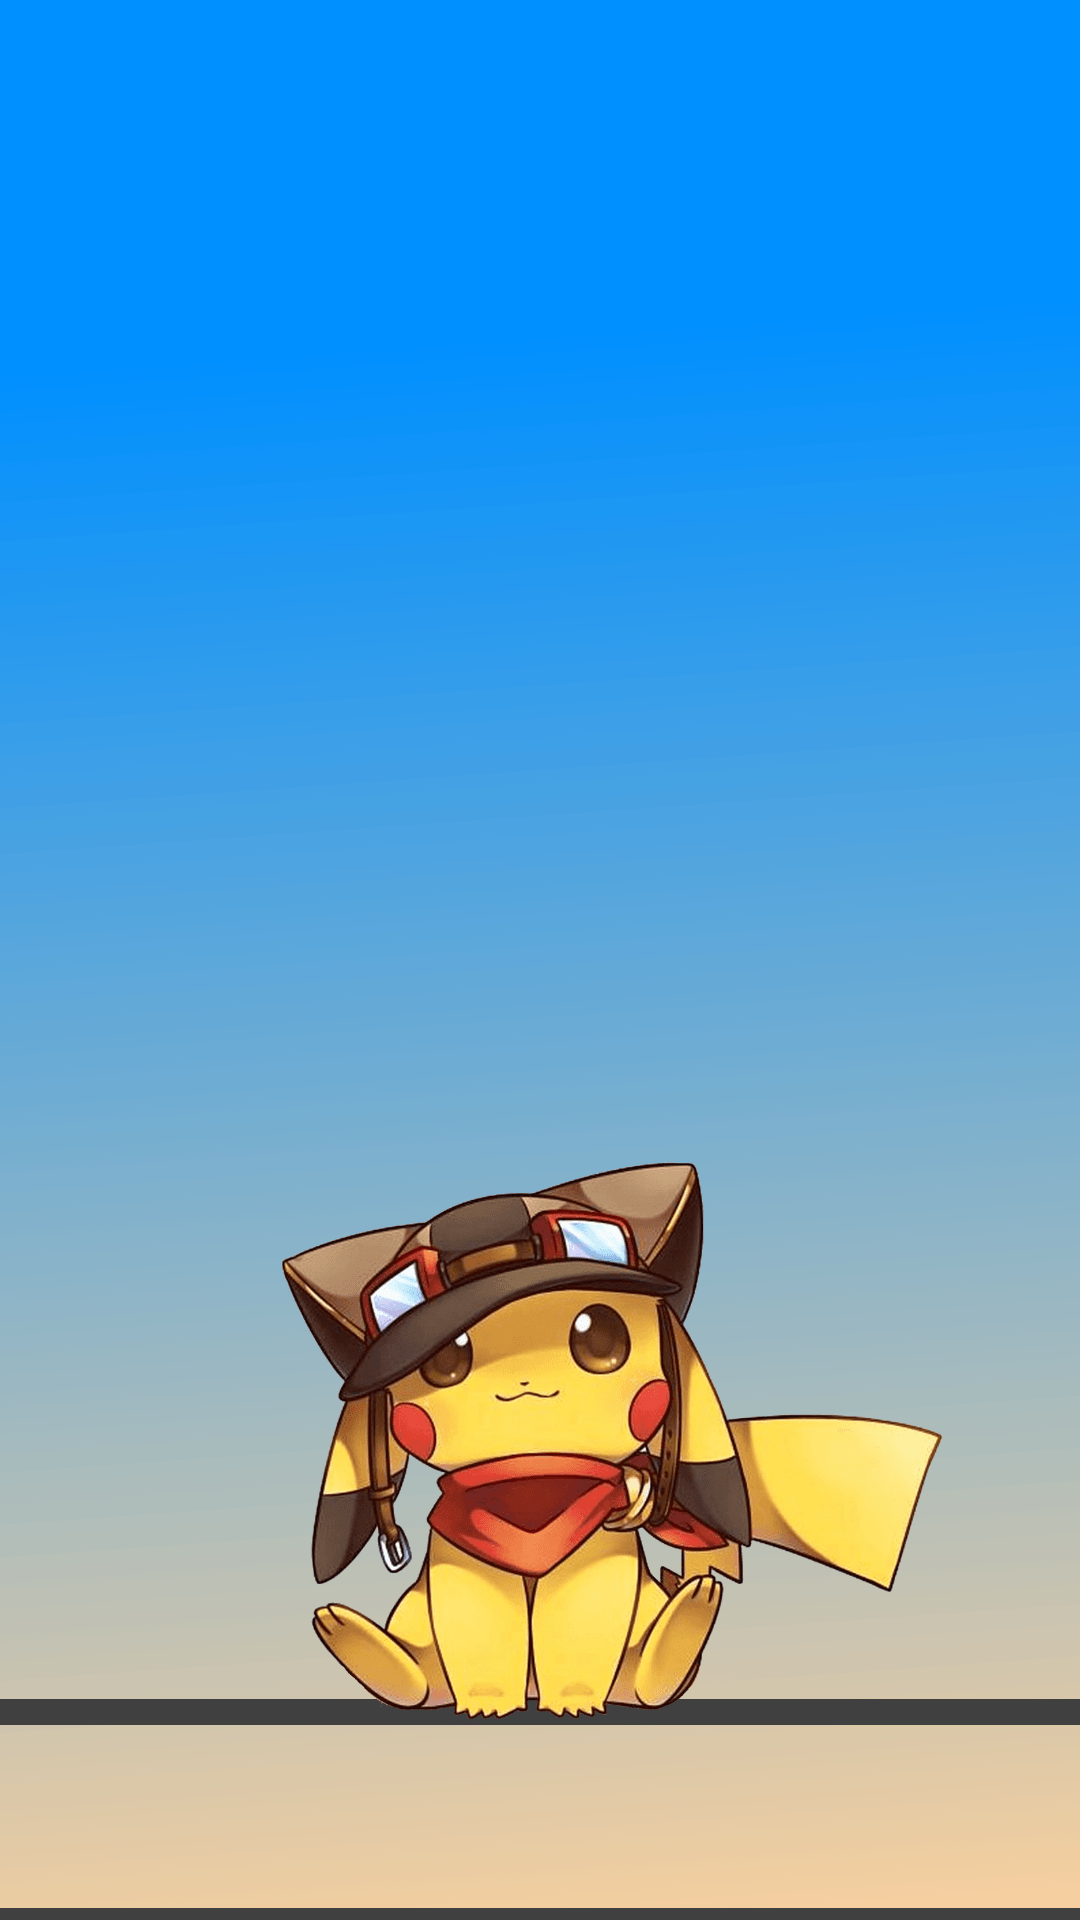 Pikachu HD Wallpaper for iPhone 7